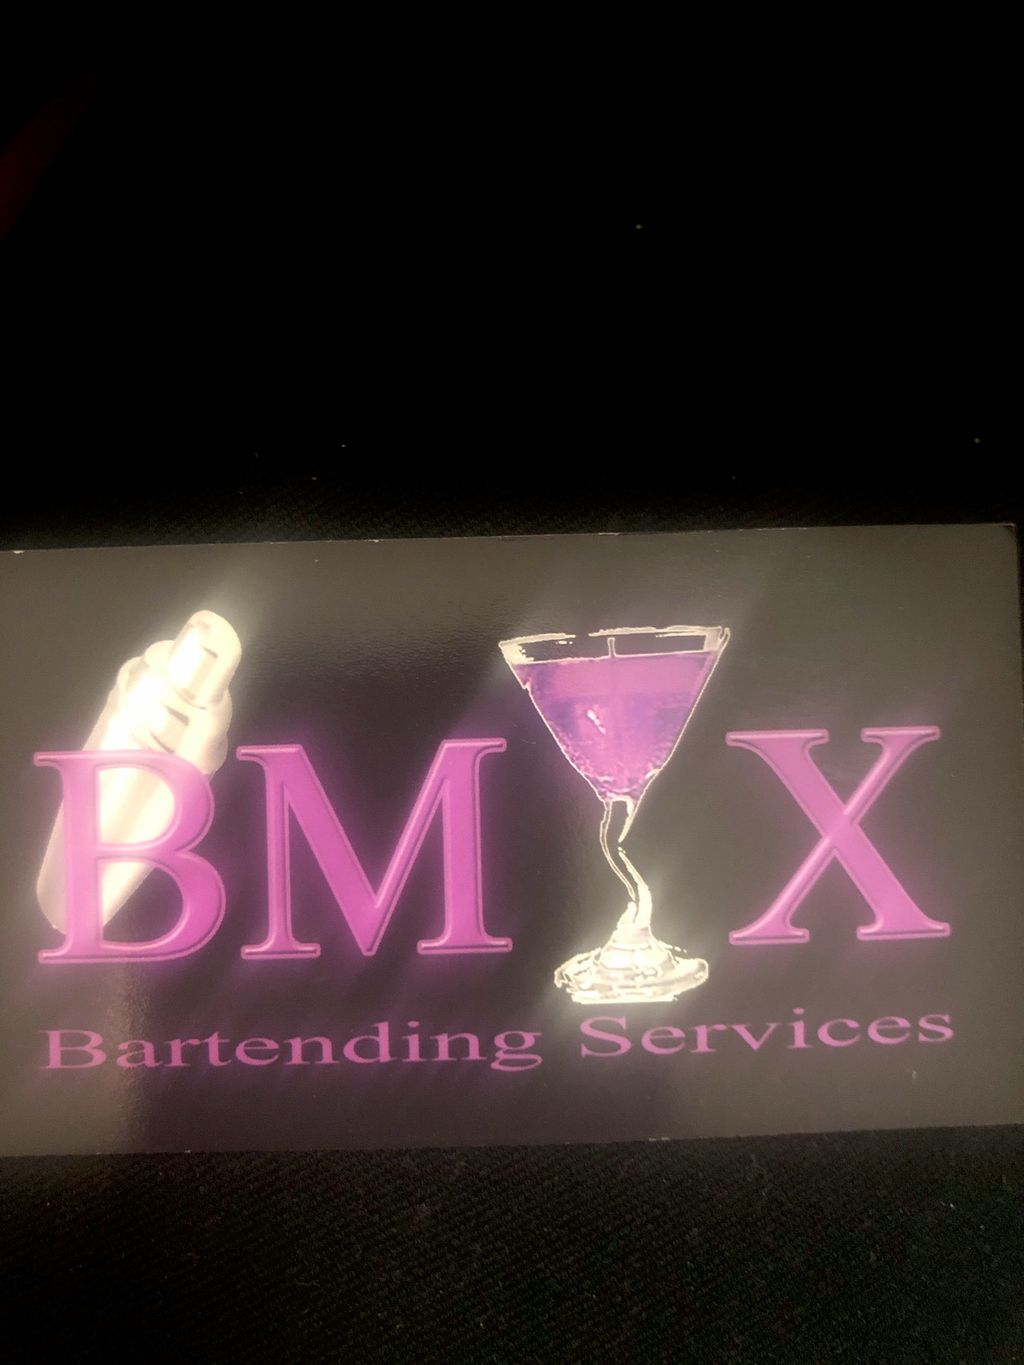 BMYX Bartending Services